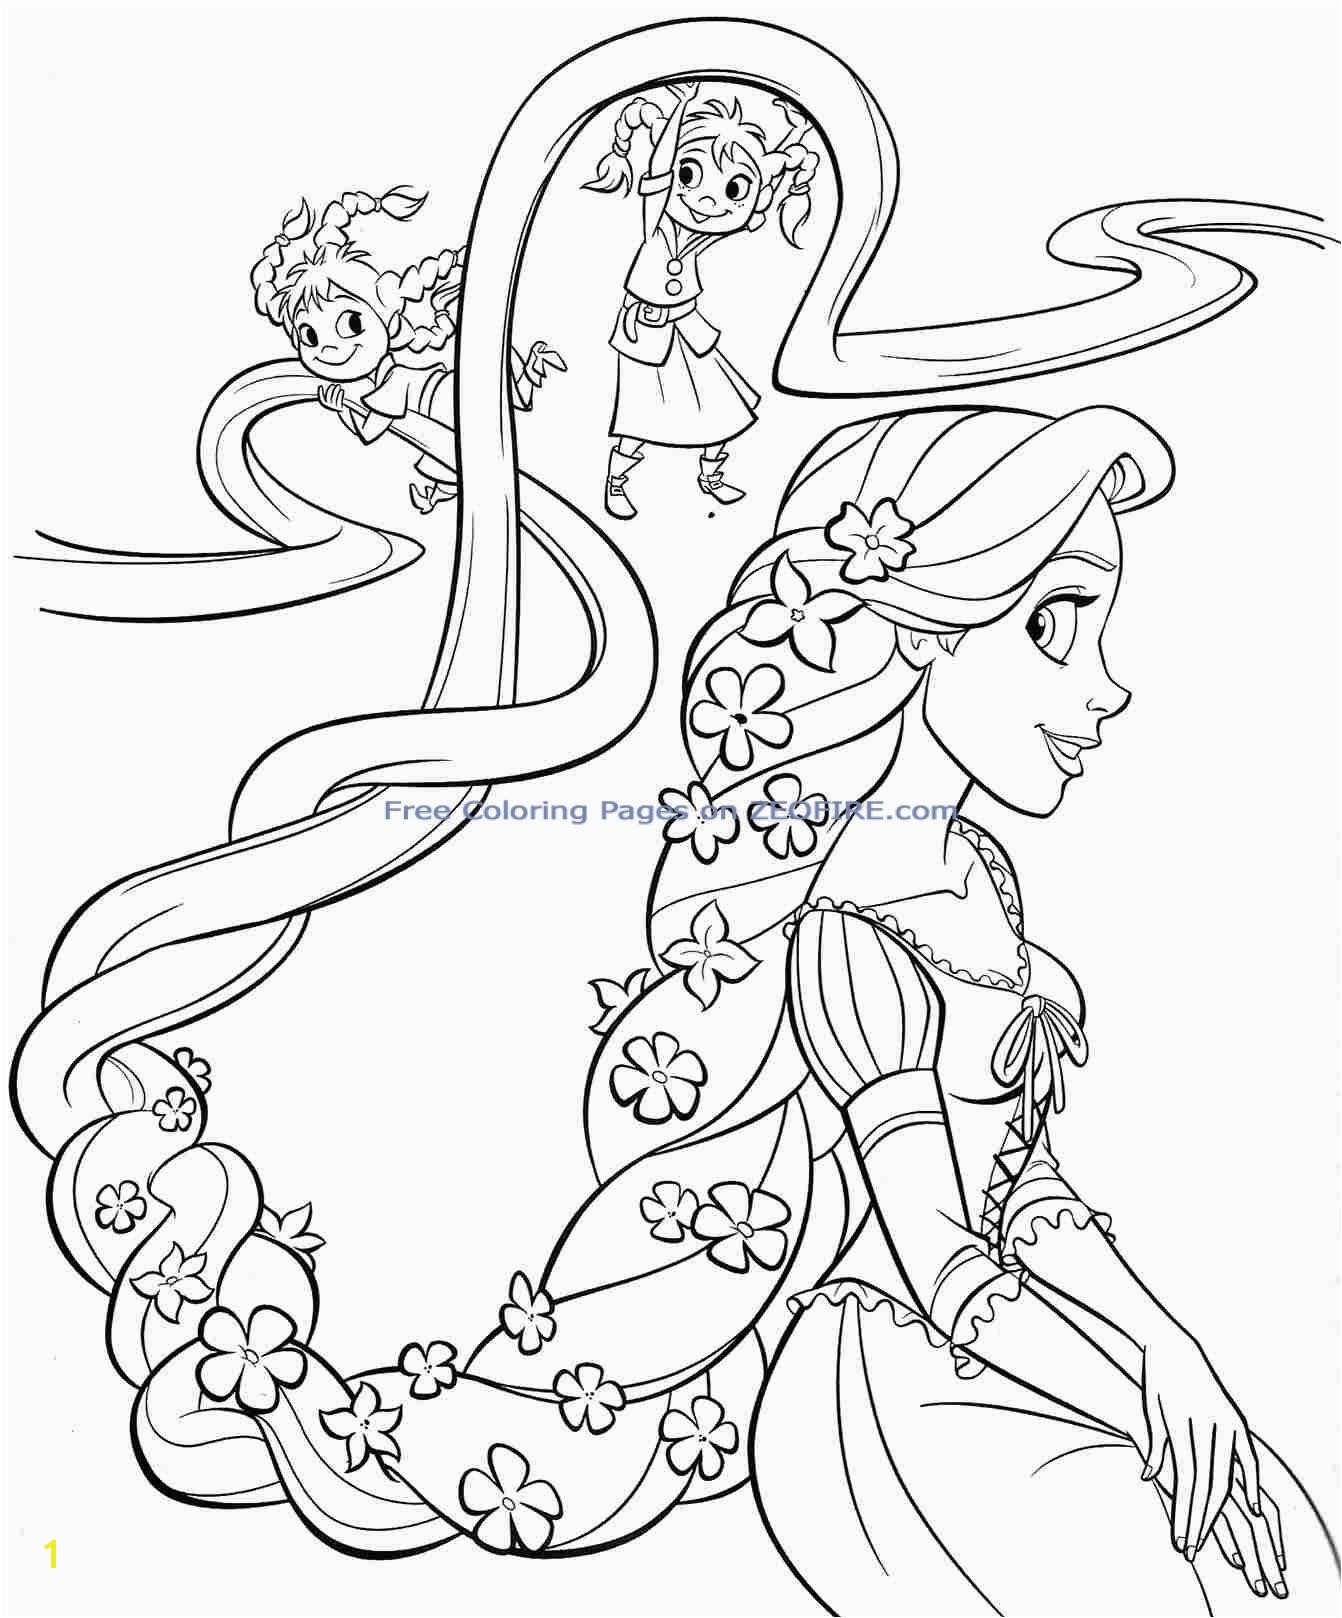 Frozen Princess Coloring Pages Printable Fresh Princess Anna Coloring Pages S Disney Frozen Printable